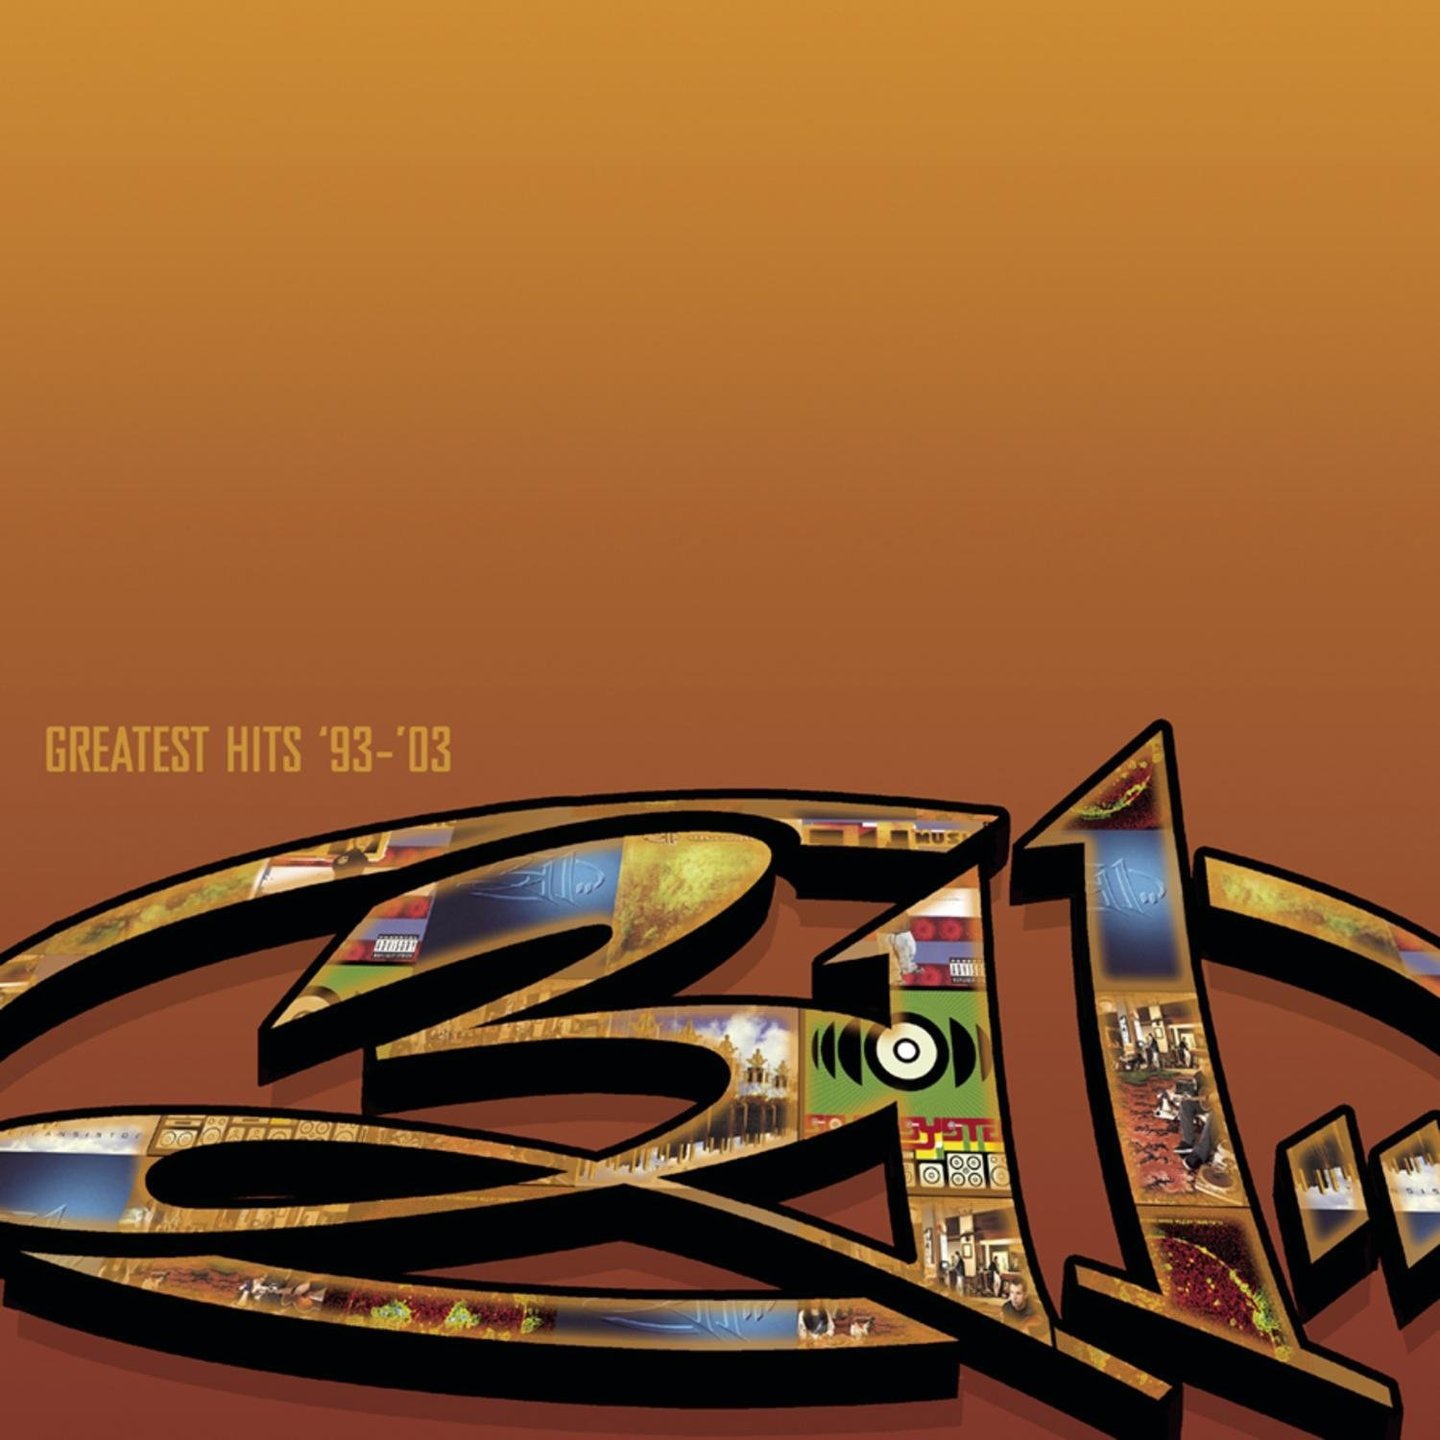 311 - Greatest Hits 93 - 03 2xLP